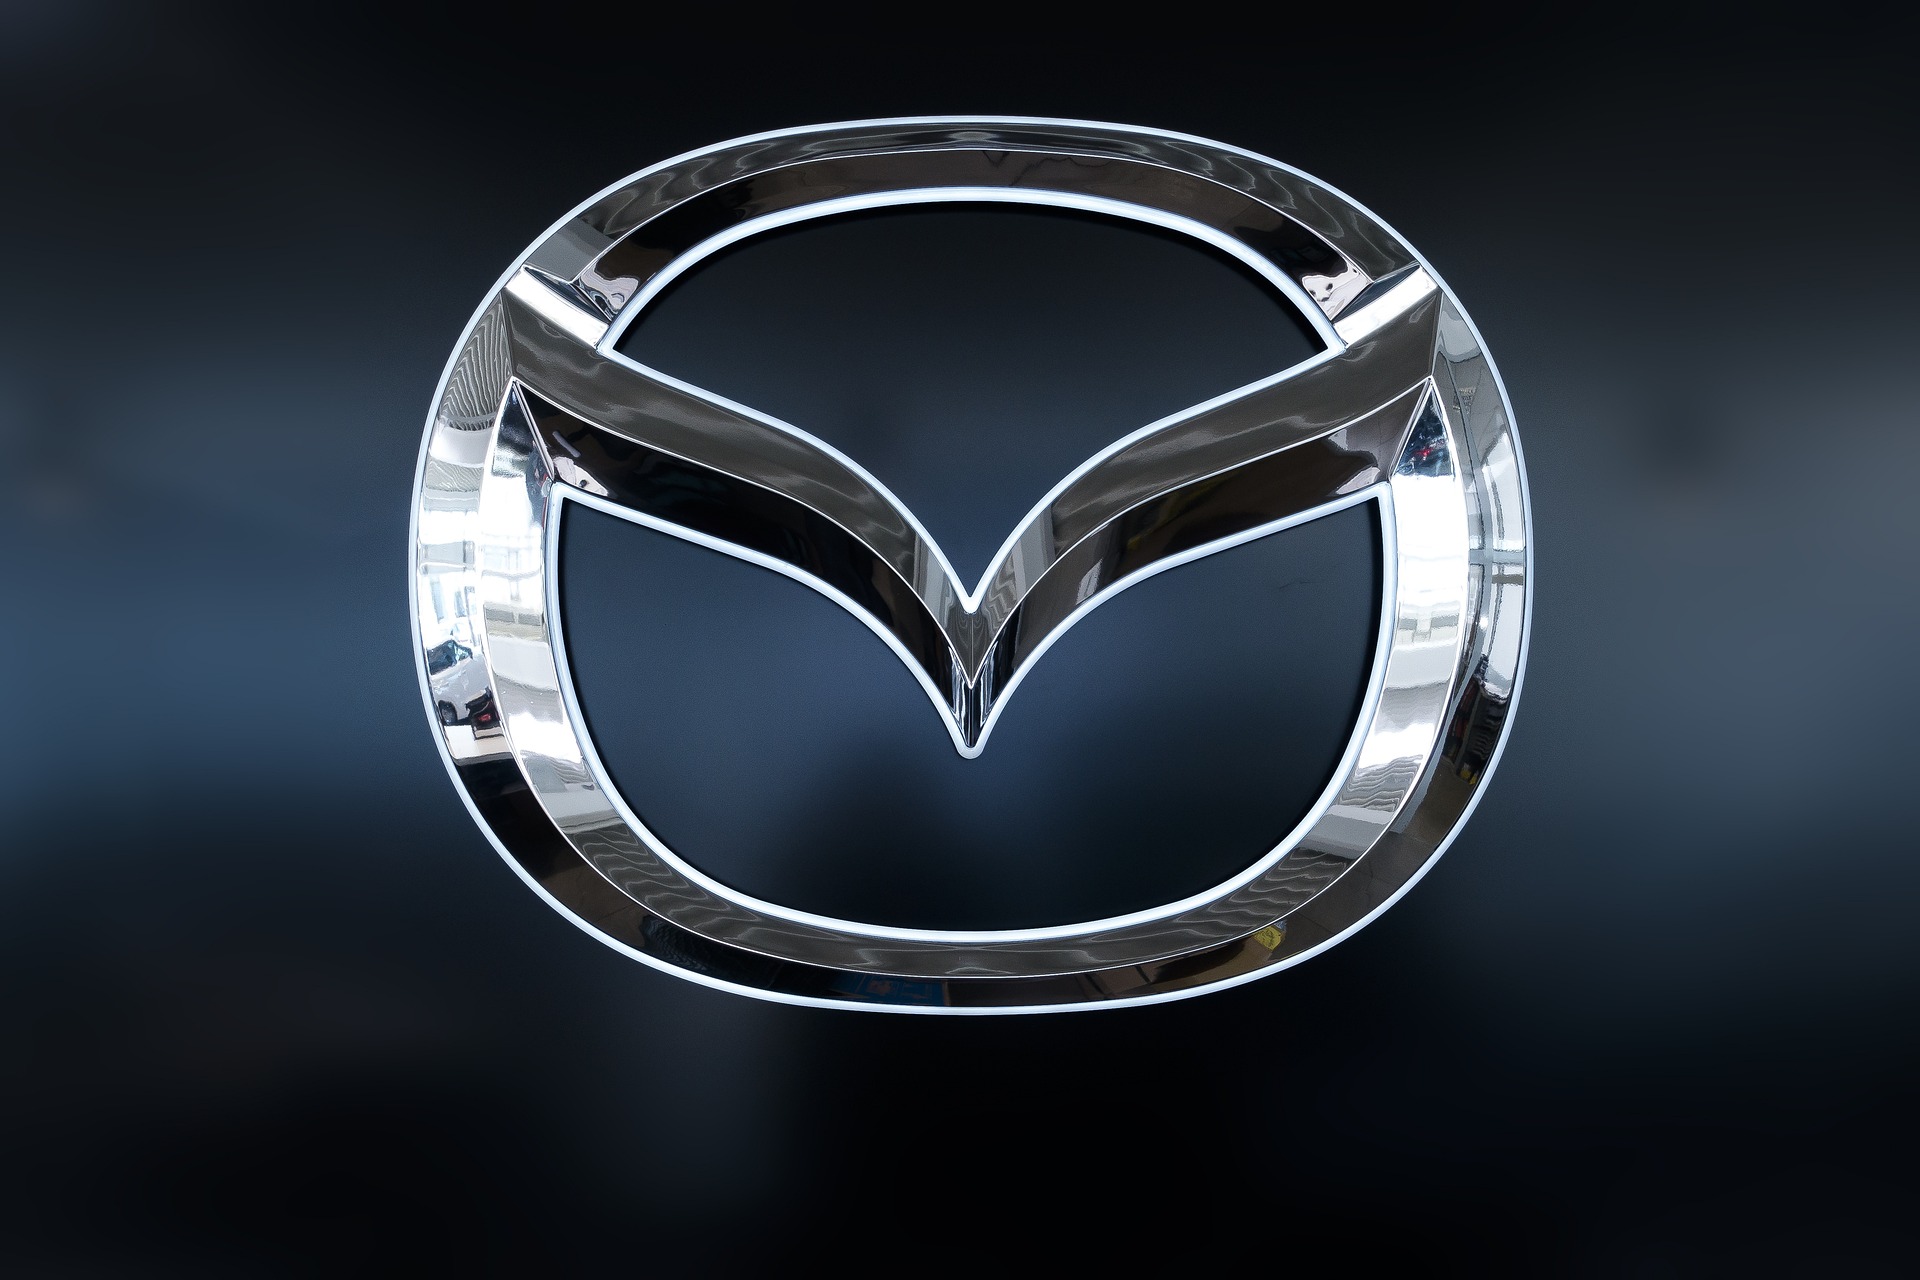 A glowing Mazda logo